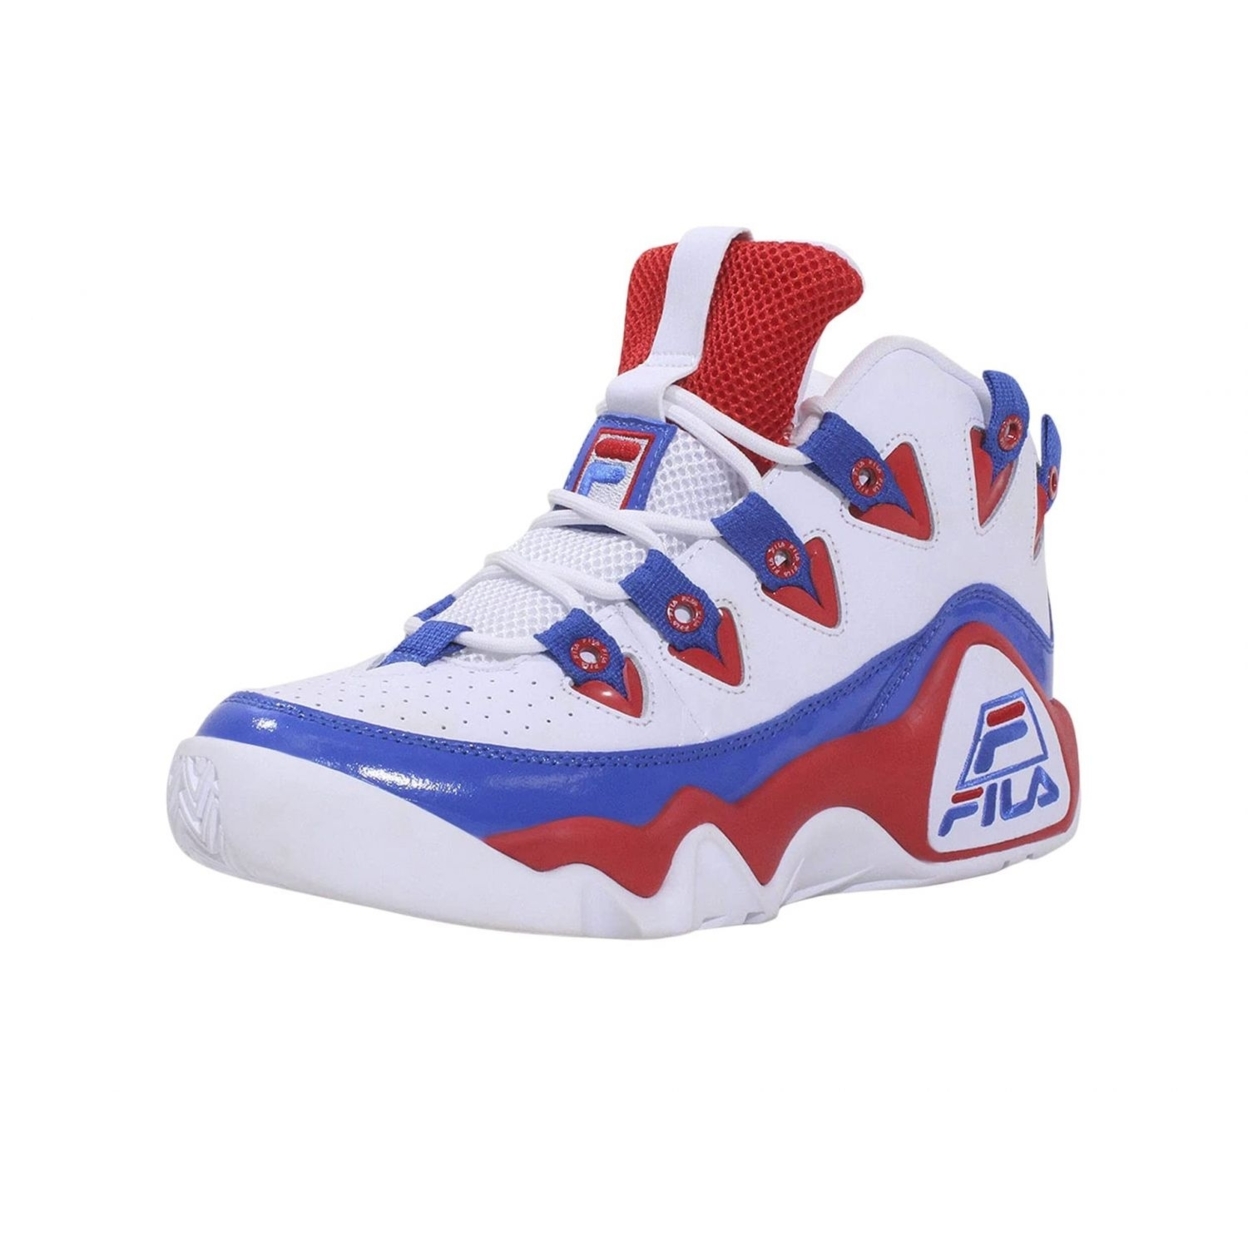 Fila Men's Grant Hill 1 Sneaker 7-15 White / Fila Red / Prince Blue - White / Fila Red / Prince Blue, 7